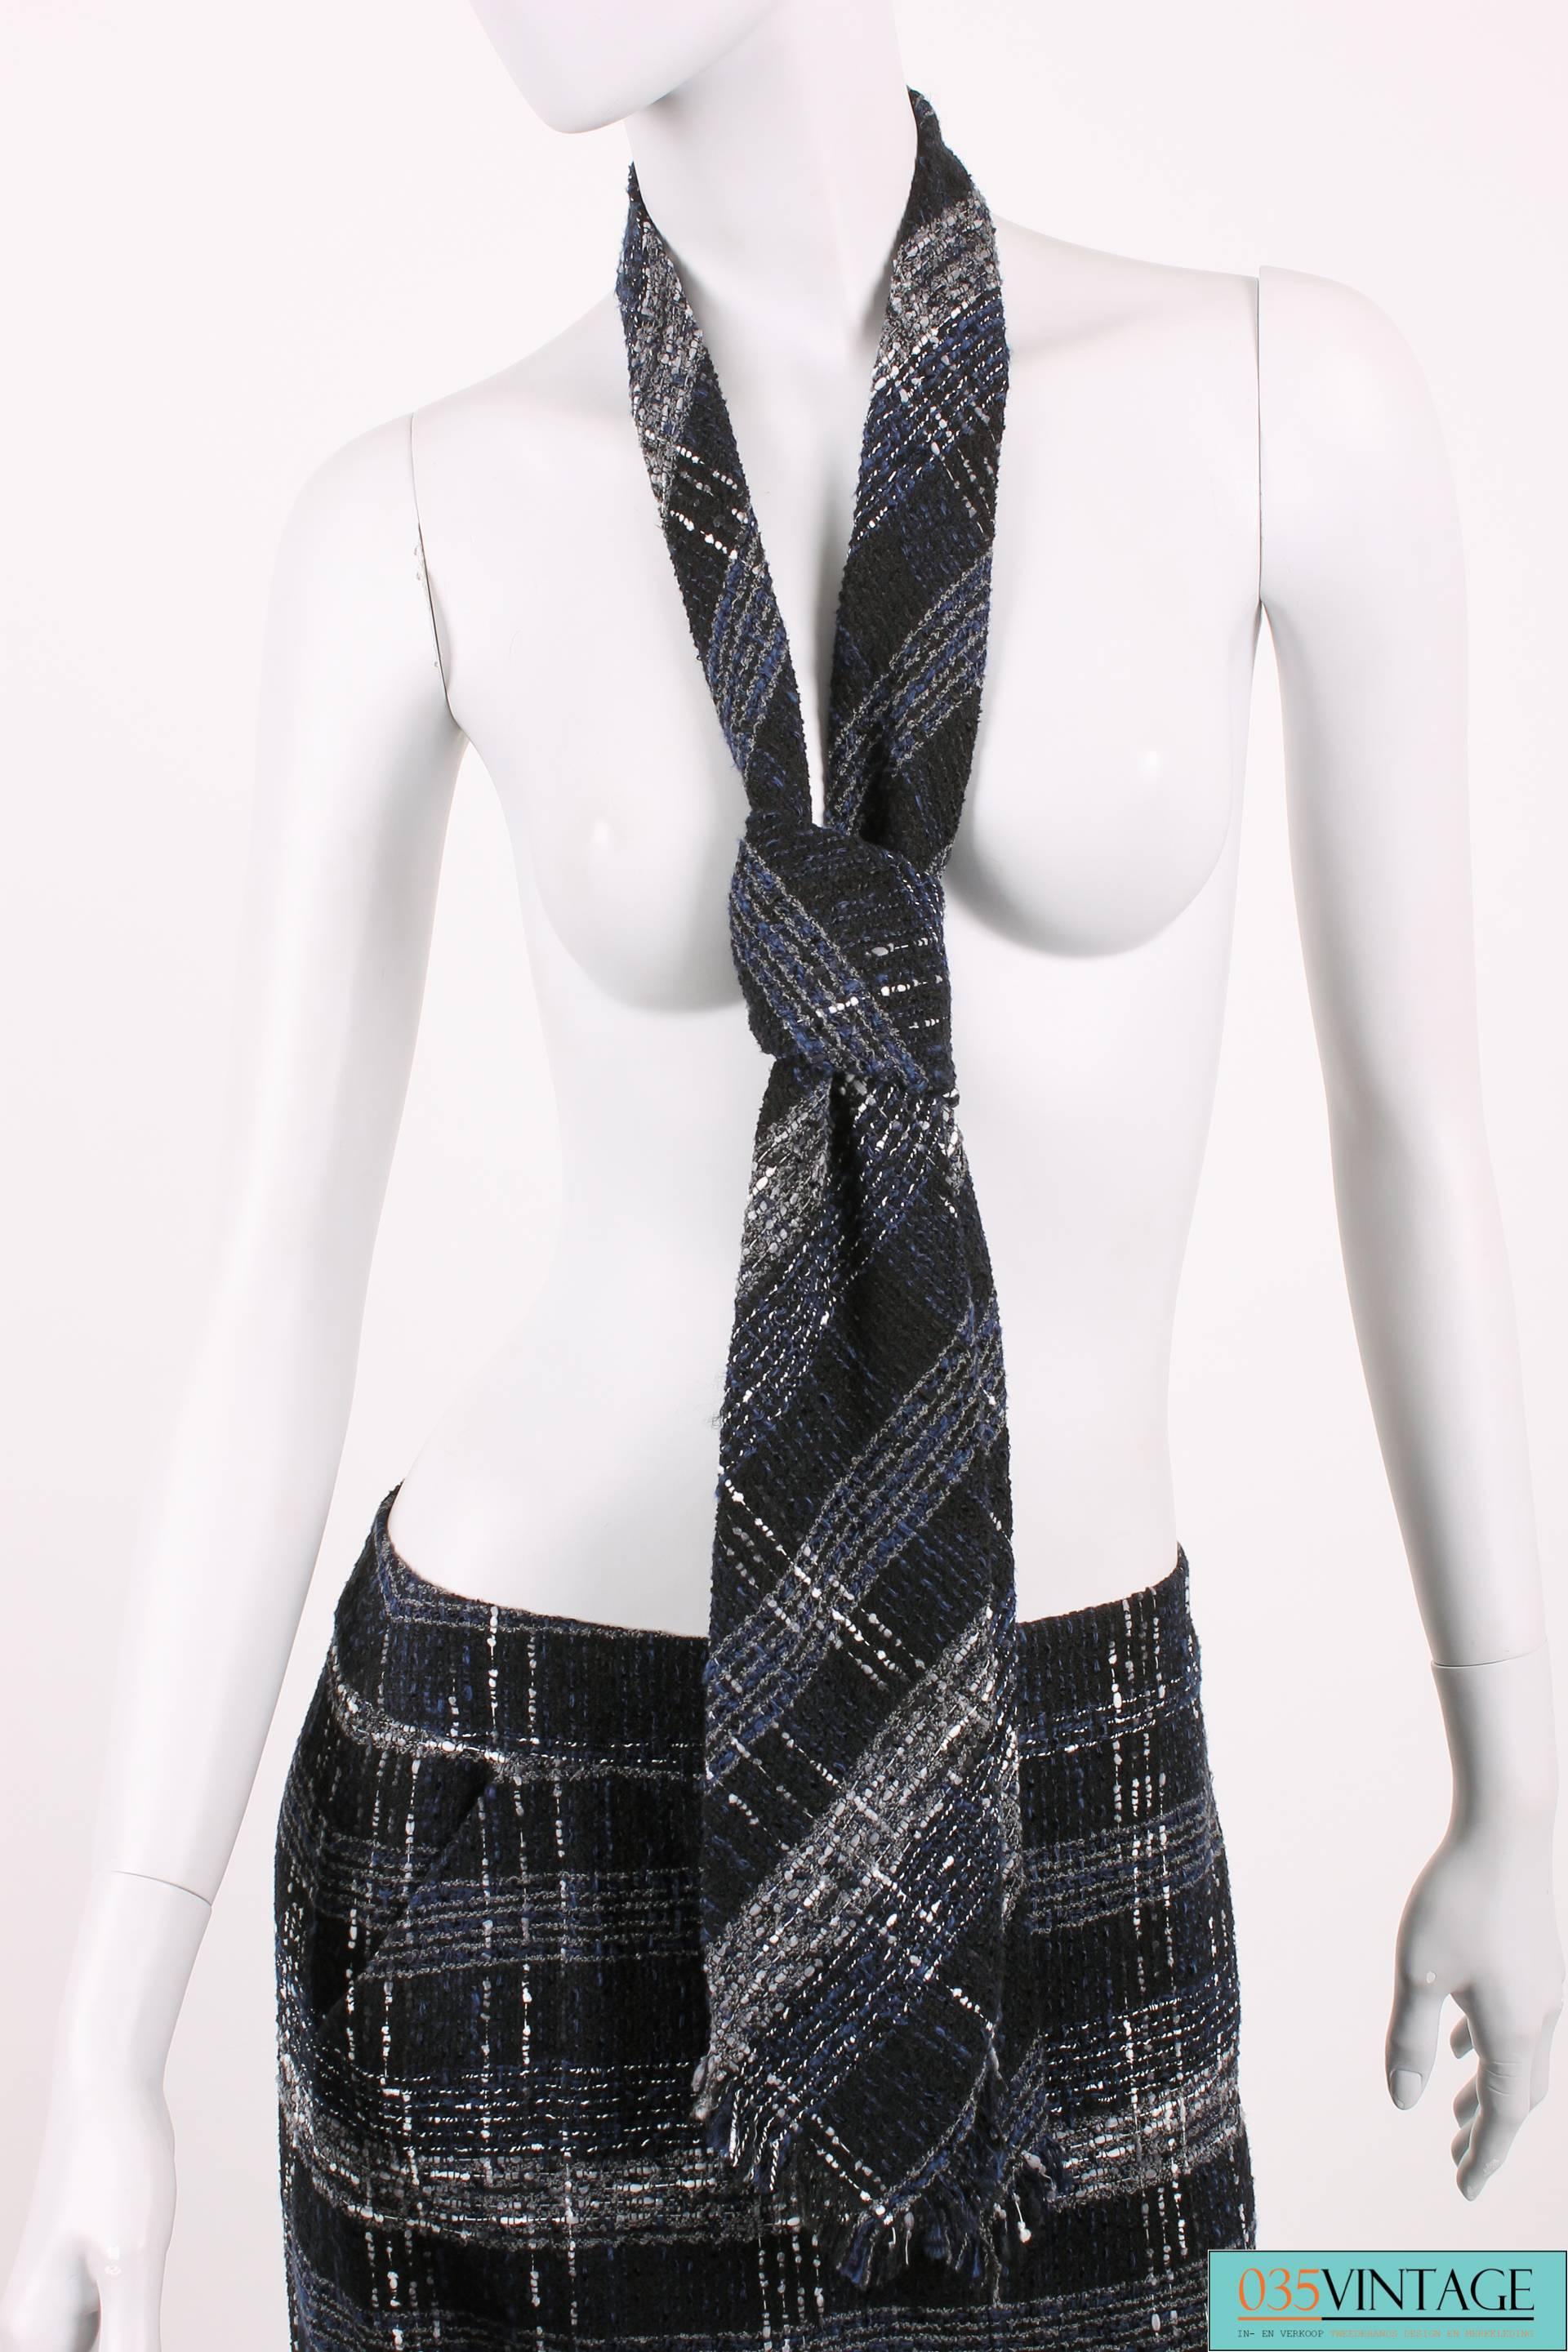 Black Chanel Suit 3-pcs Jacket, Skirt & Tie - dark blue/black/grey/white